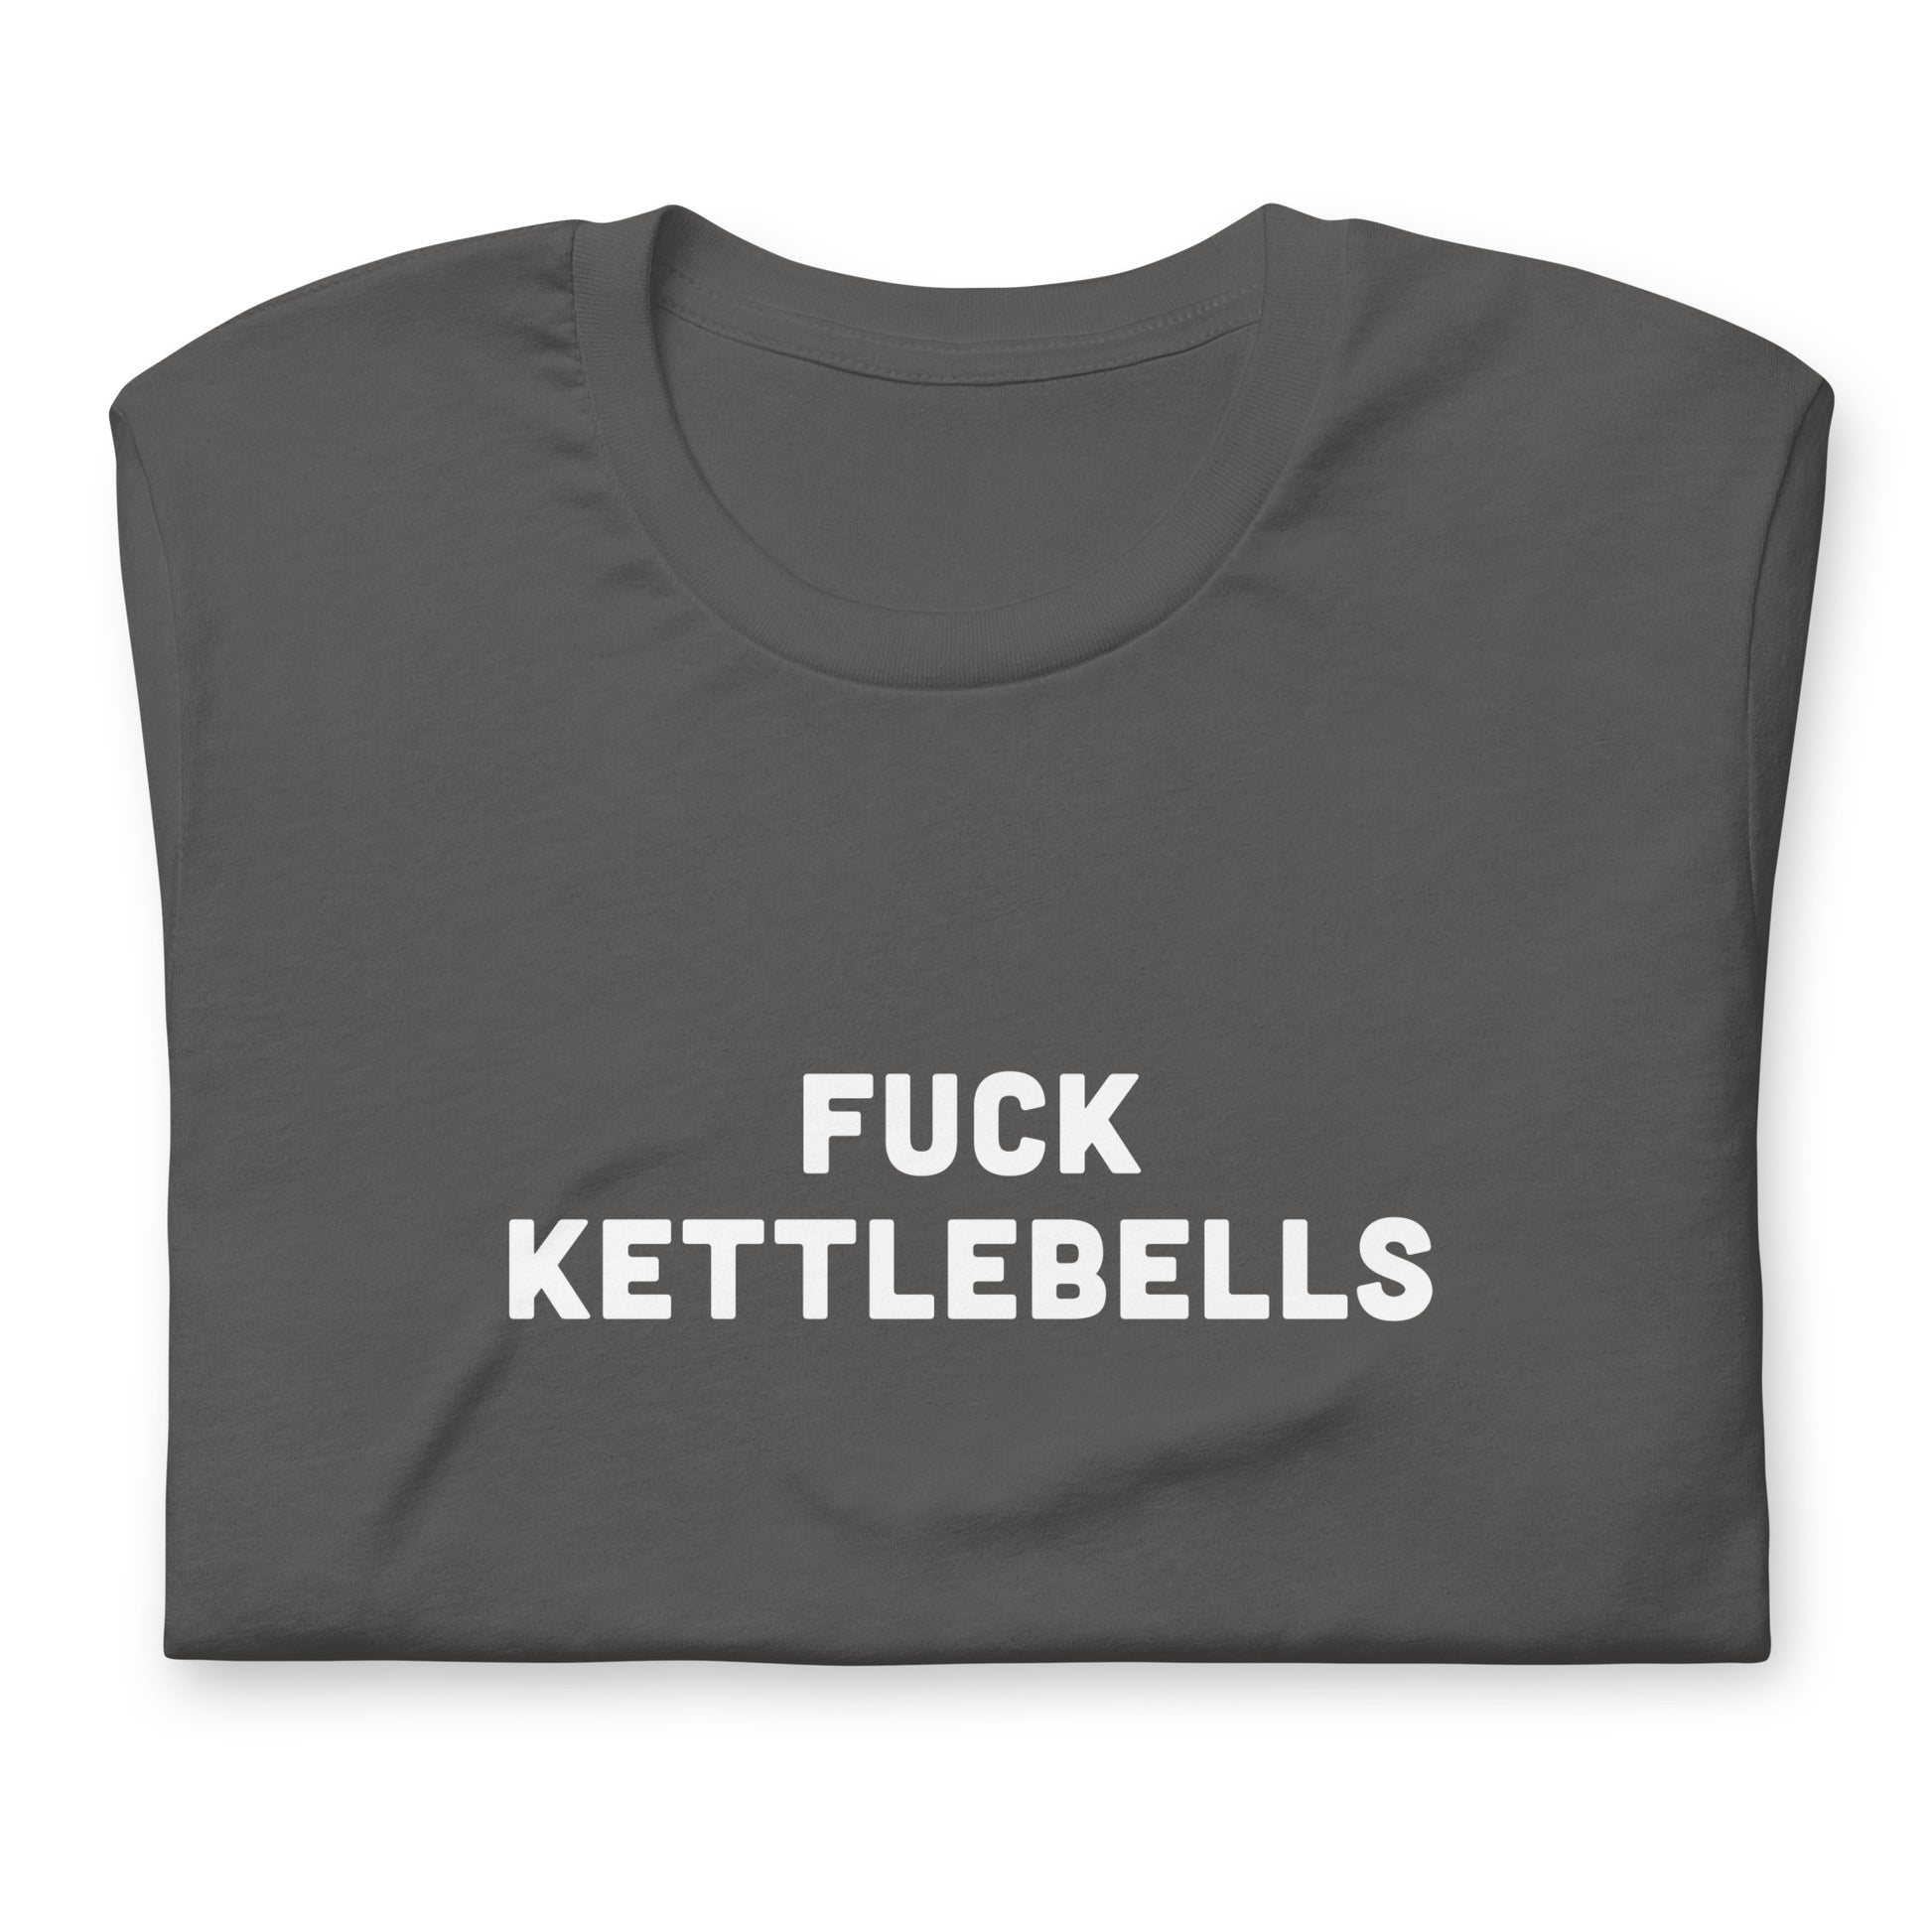 Fuck Kettlebells T-Shirt Size 2XL Color Black